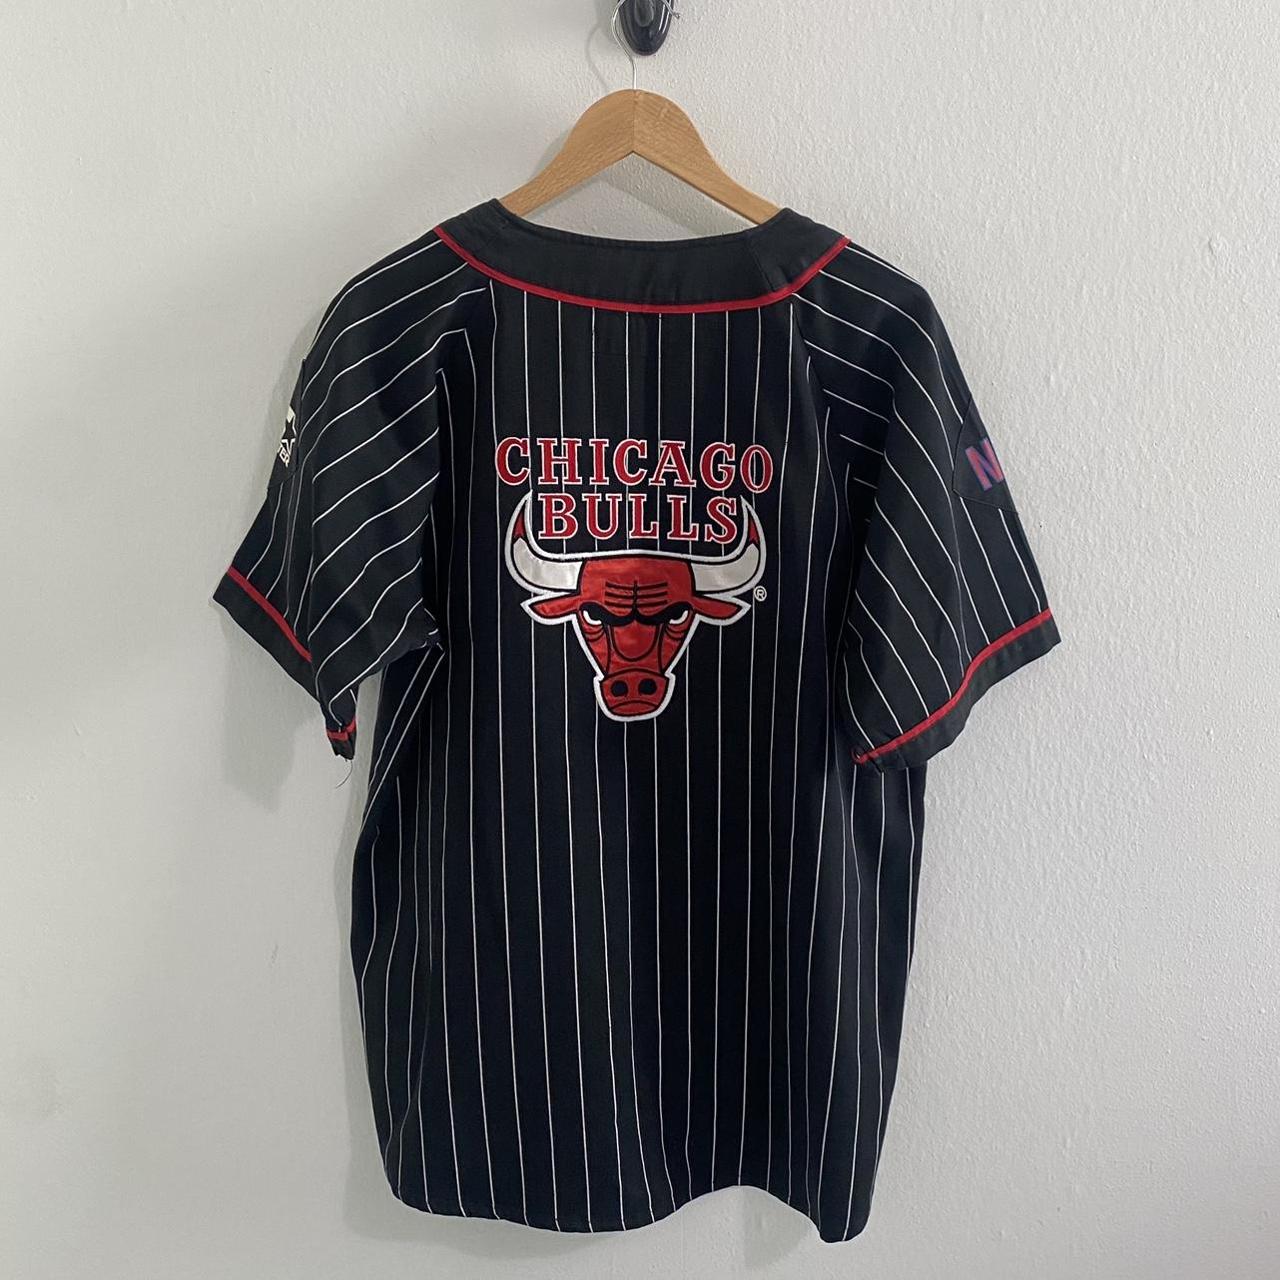 Vintage 90s Chicago Bulls Baseball Pinstripe Jersey size XL